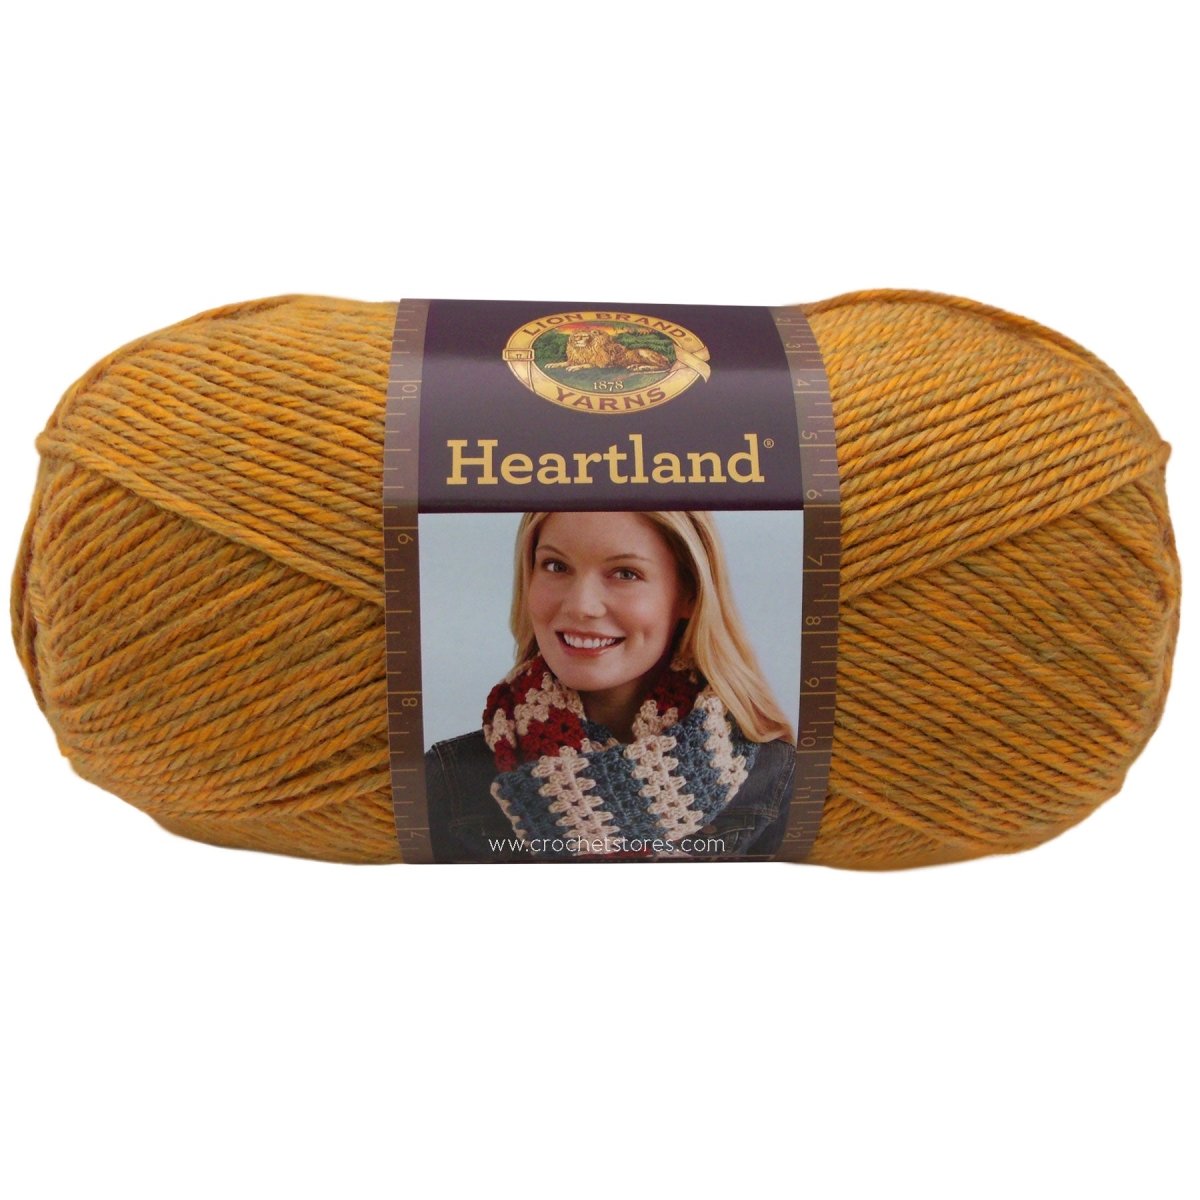 HEARTLAND - Crochetstores136-158023032010274